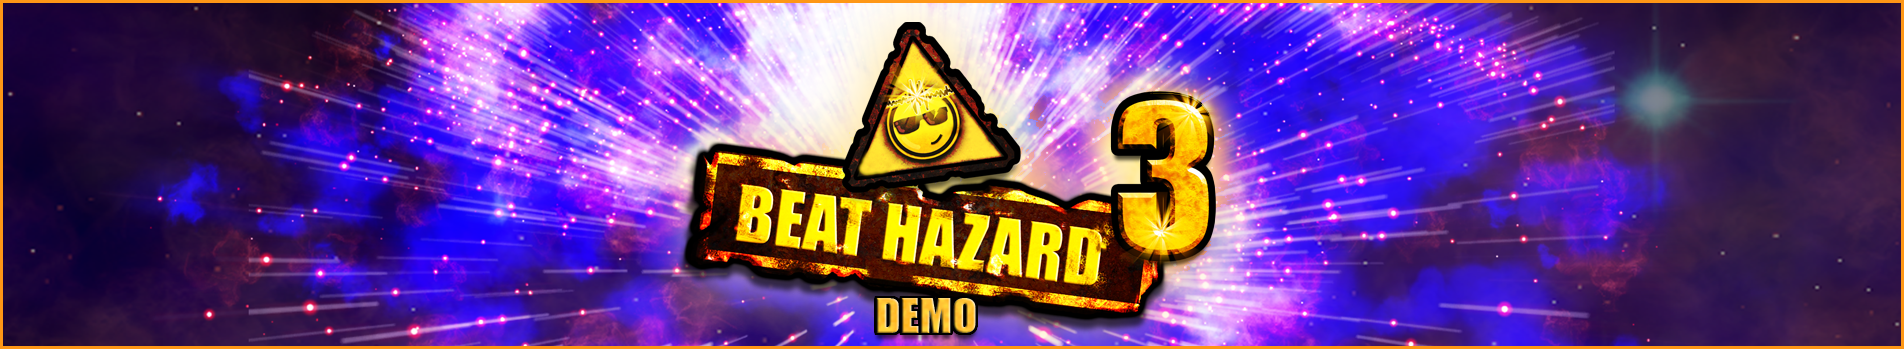 Beat Hazard 3 Demo